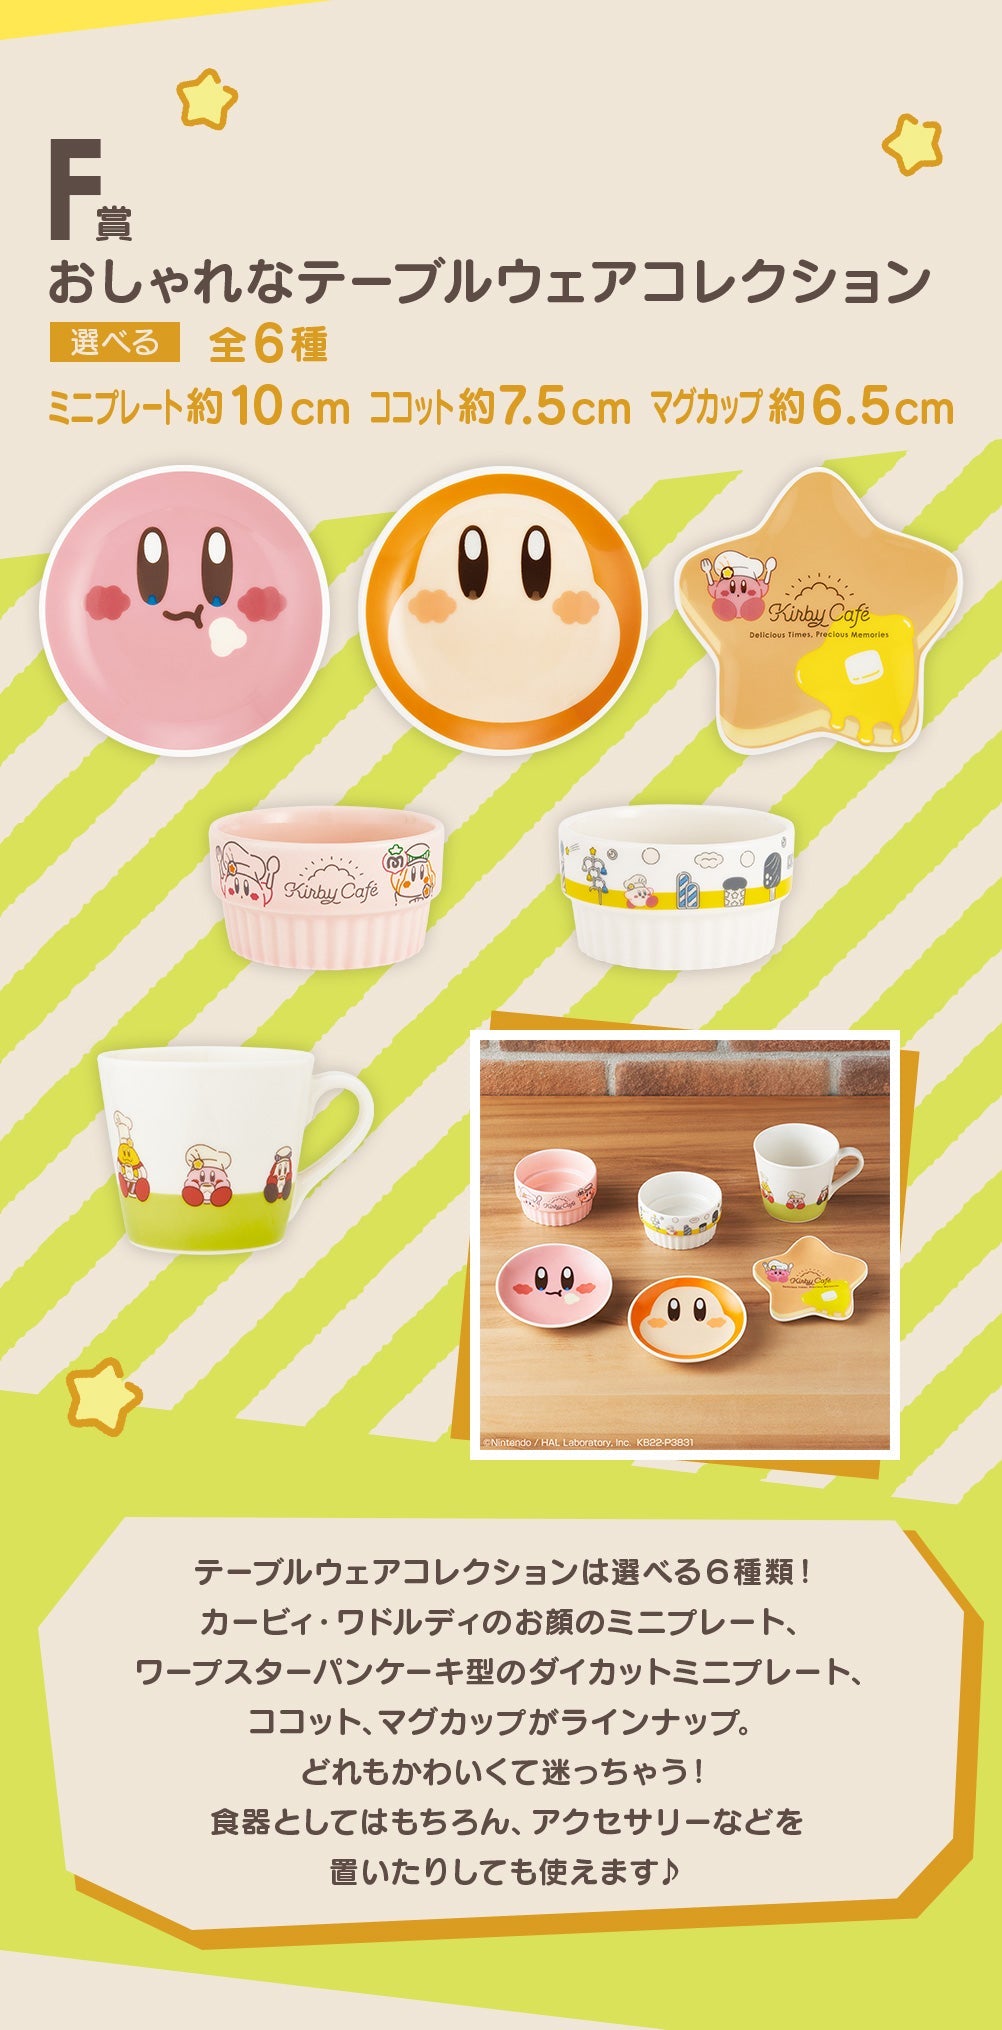 Ichiban Kuji Kirby Cafe-Bandai-Ace Cards &amp; Collectibles